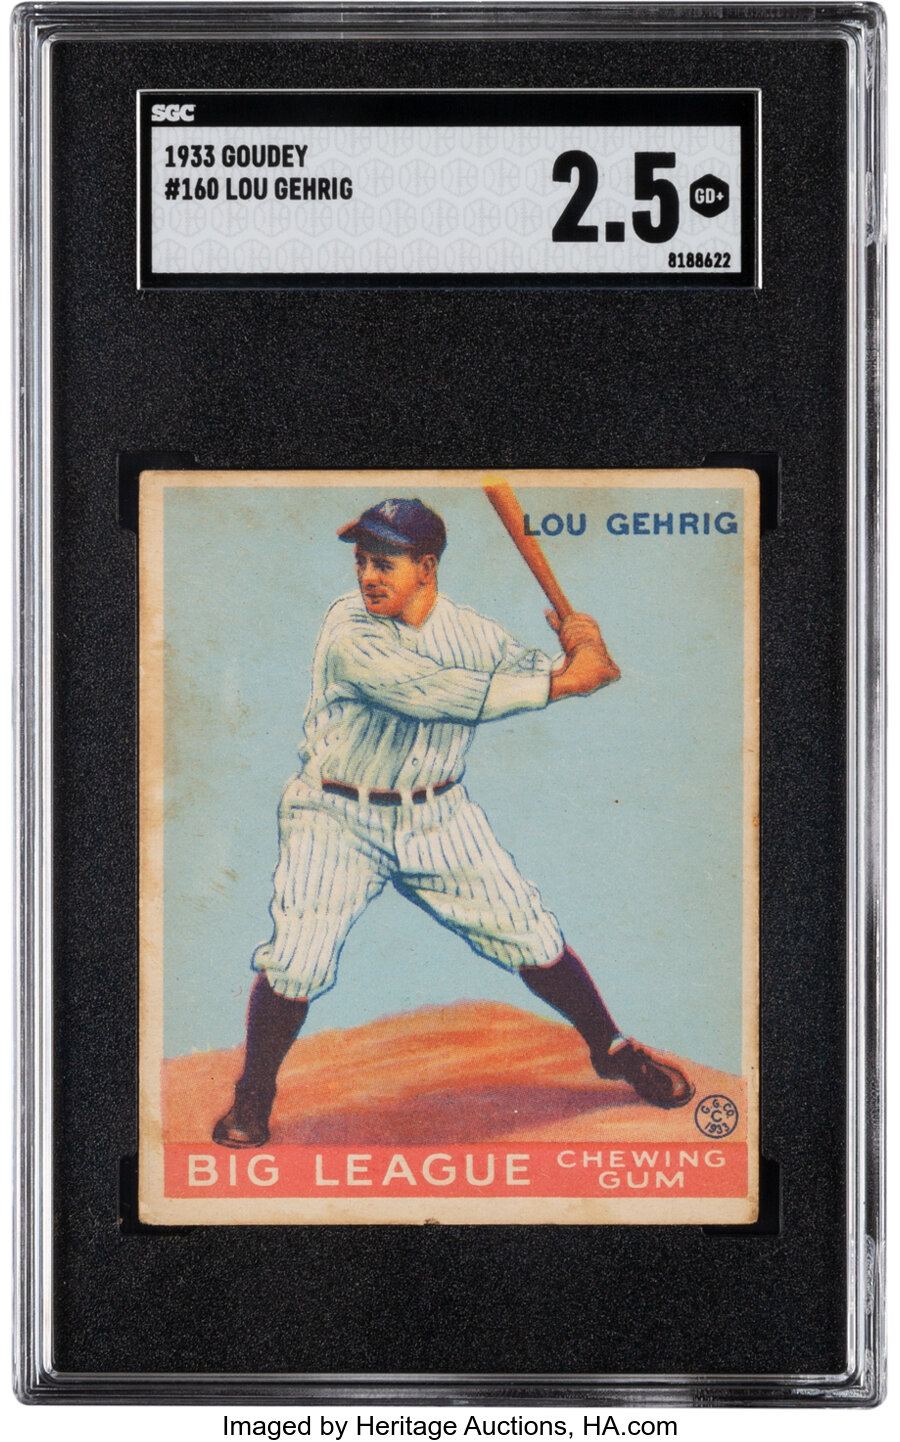 1933 Goudey Lou Gehrig #160 SGC Good+ 2.5